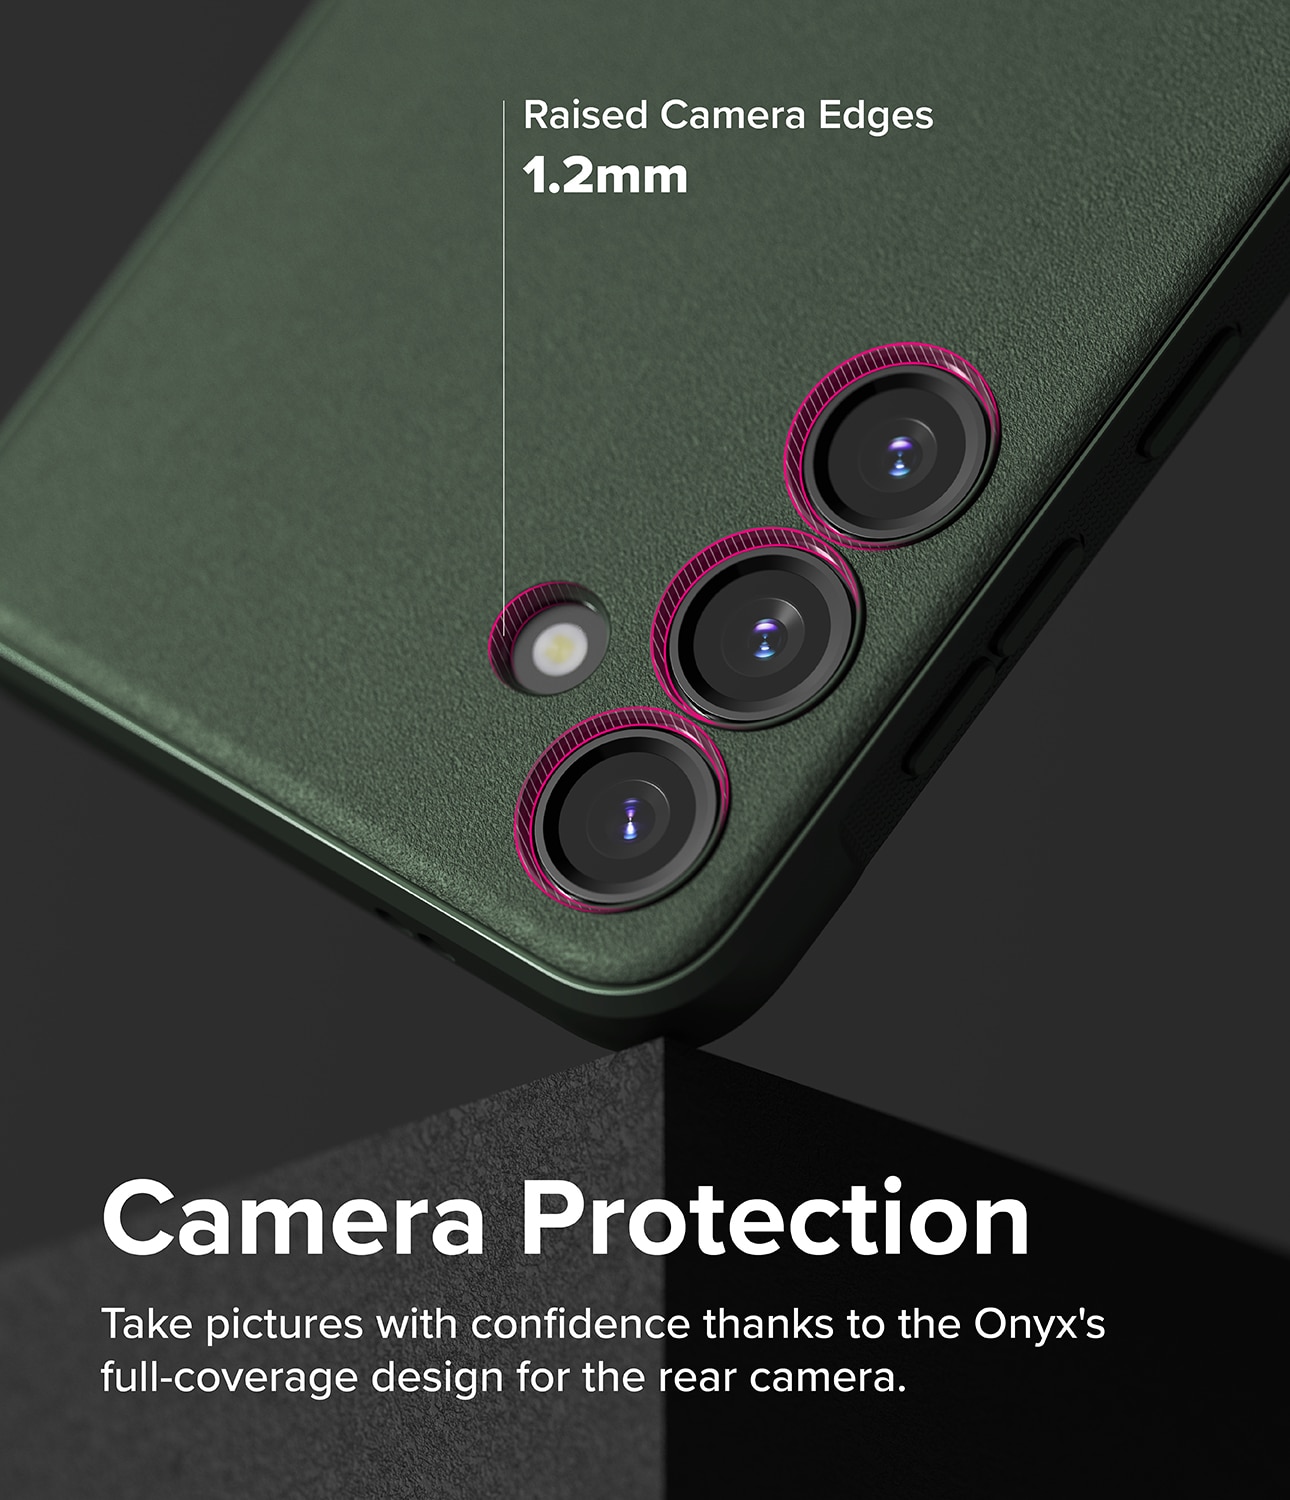 Onyx Case Samsung Galaxy S24 Dark Green